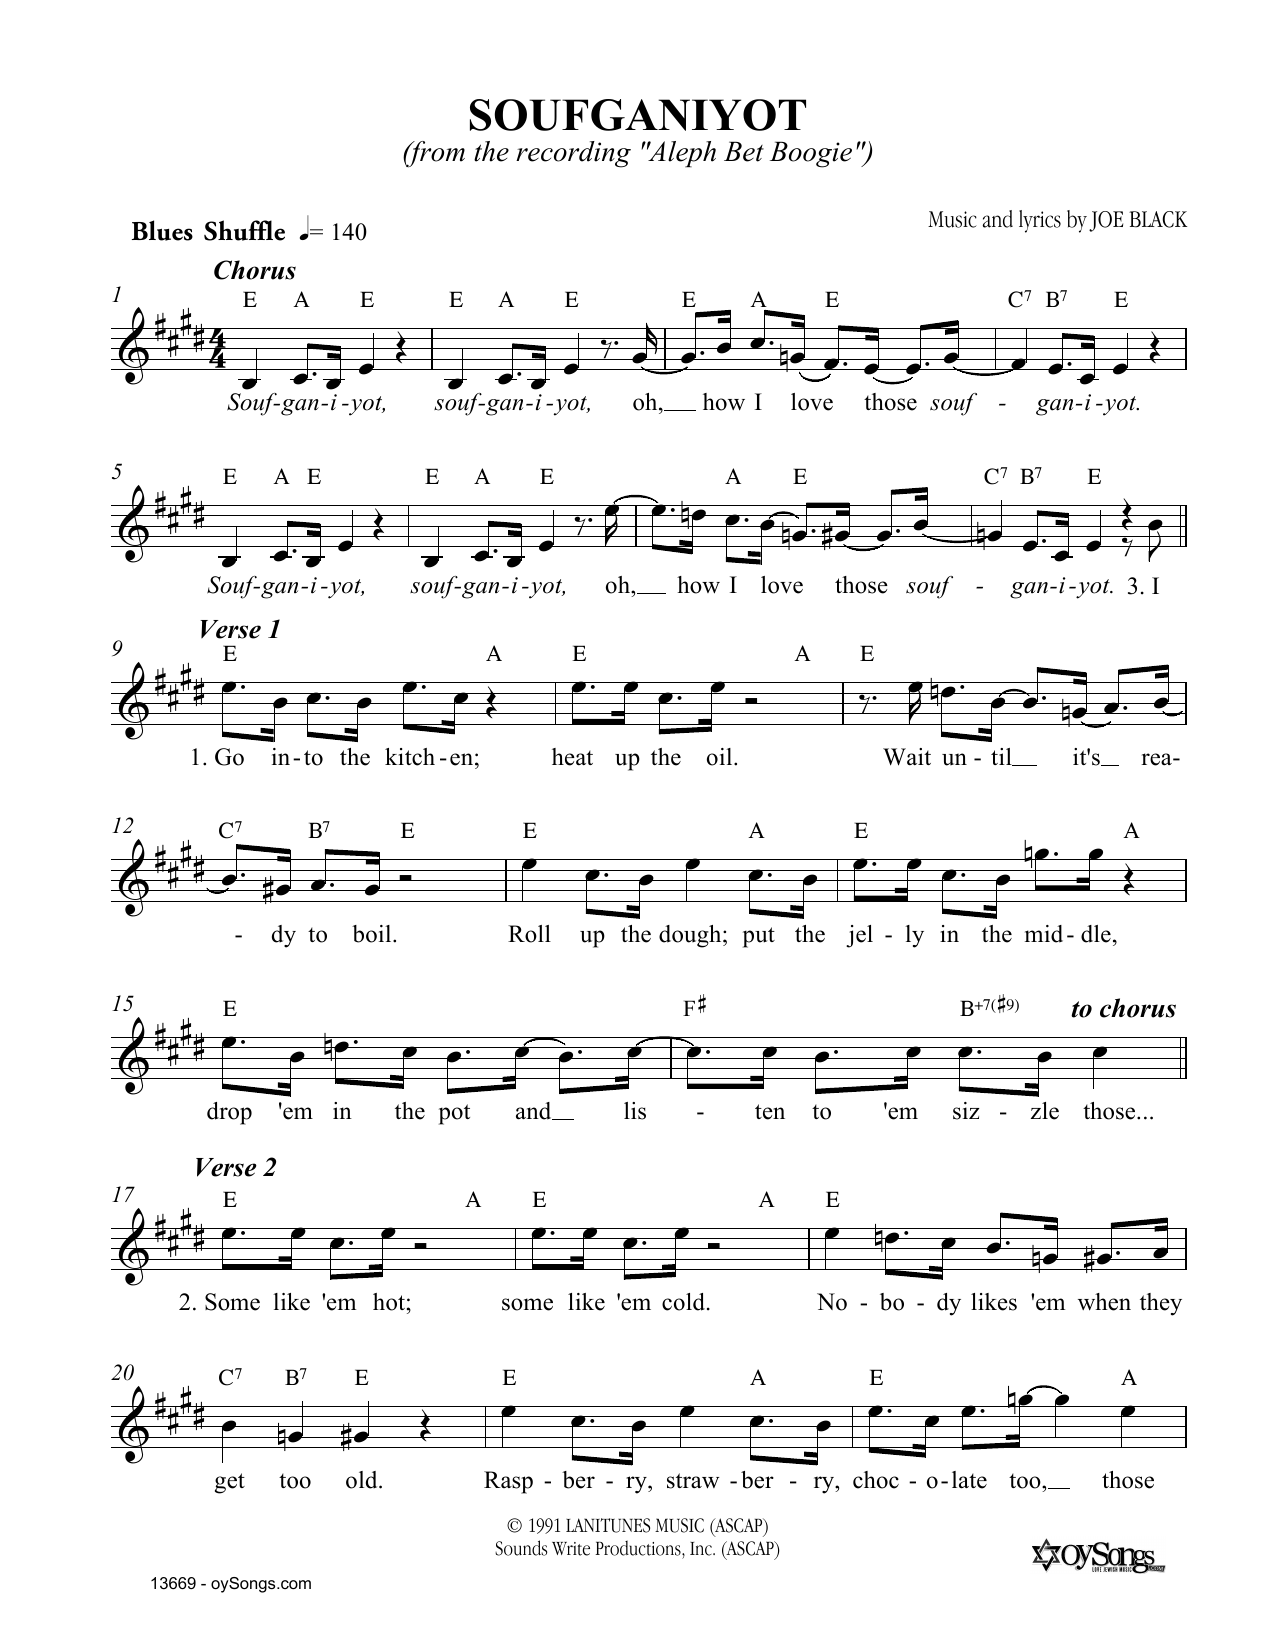 Joe Black Soufganiyot Sheet Music Notes & Chords for Melody Line, Lyrics & Chords - Download or Print PDF